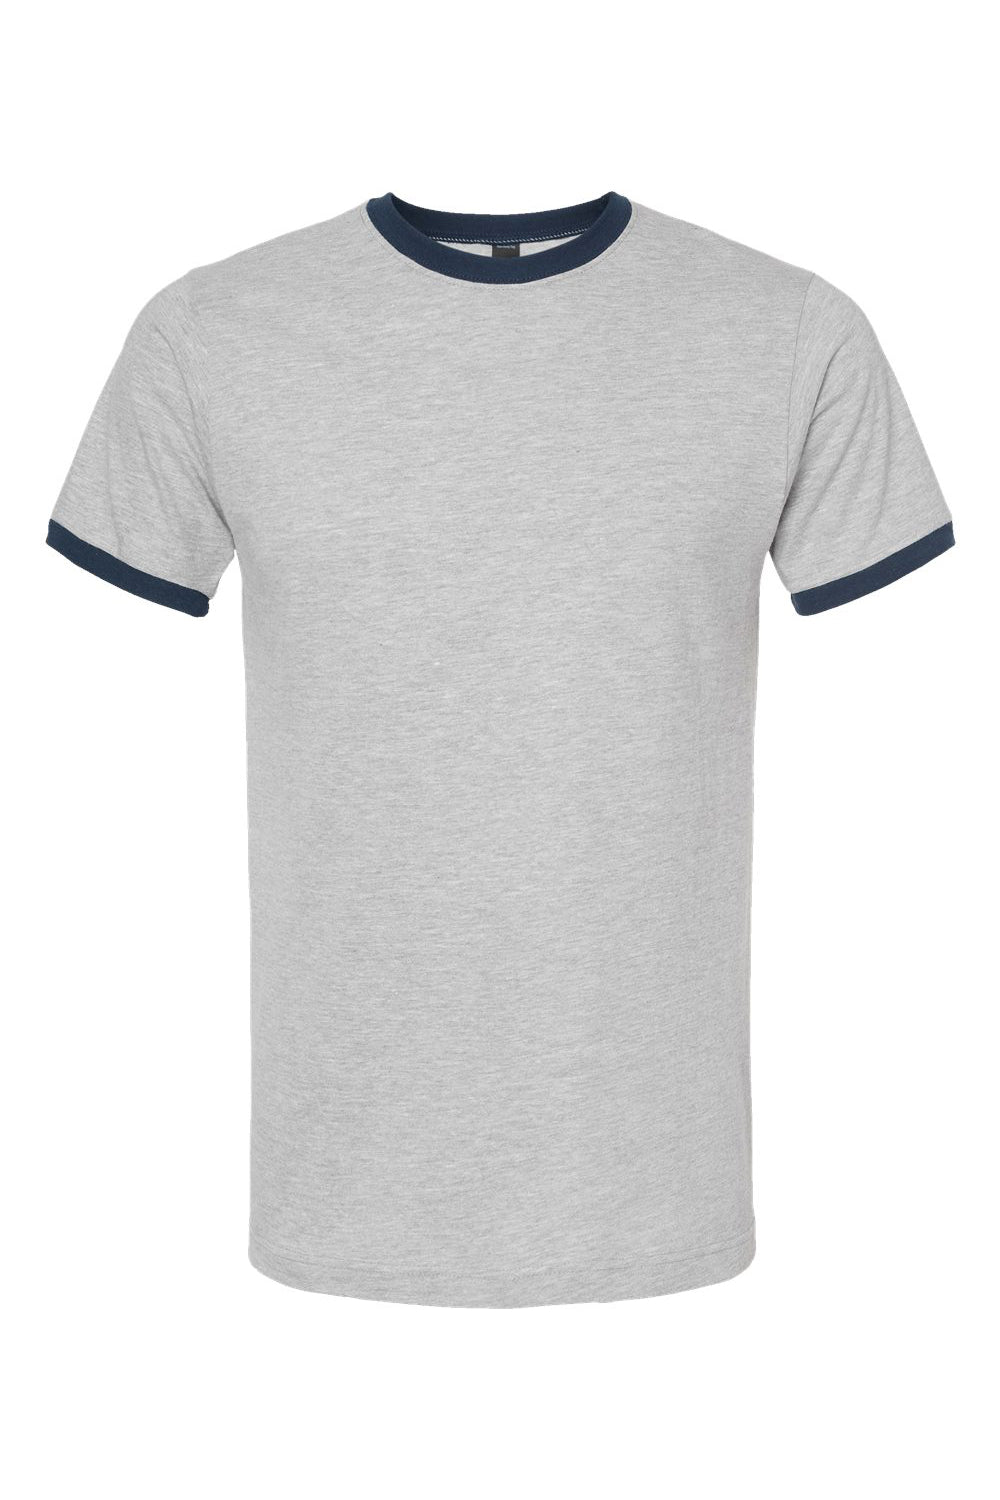 Tultex 246 Mens Fine Jersey Ringer Short Sleeve Crewneck T-Shirt Heather Grey/Navy Blue Flat Front